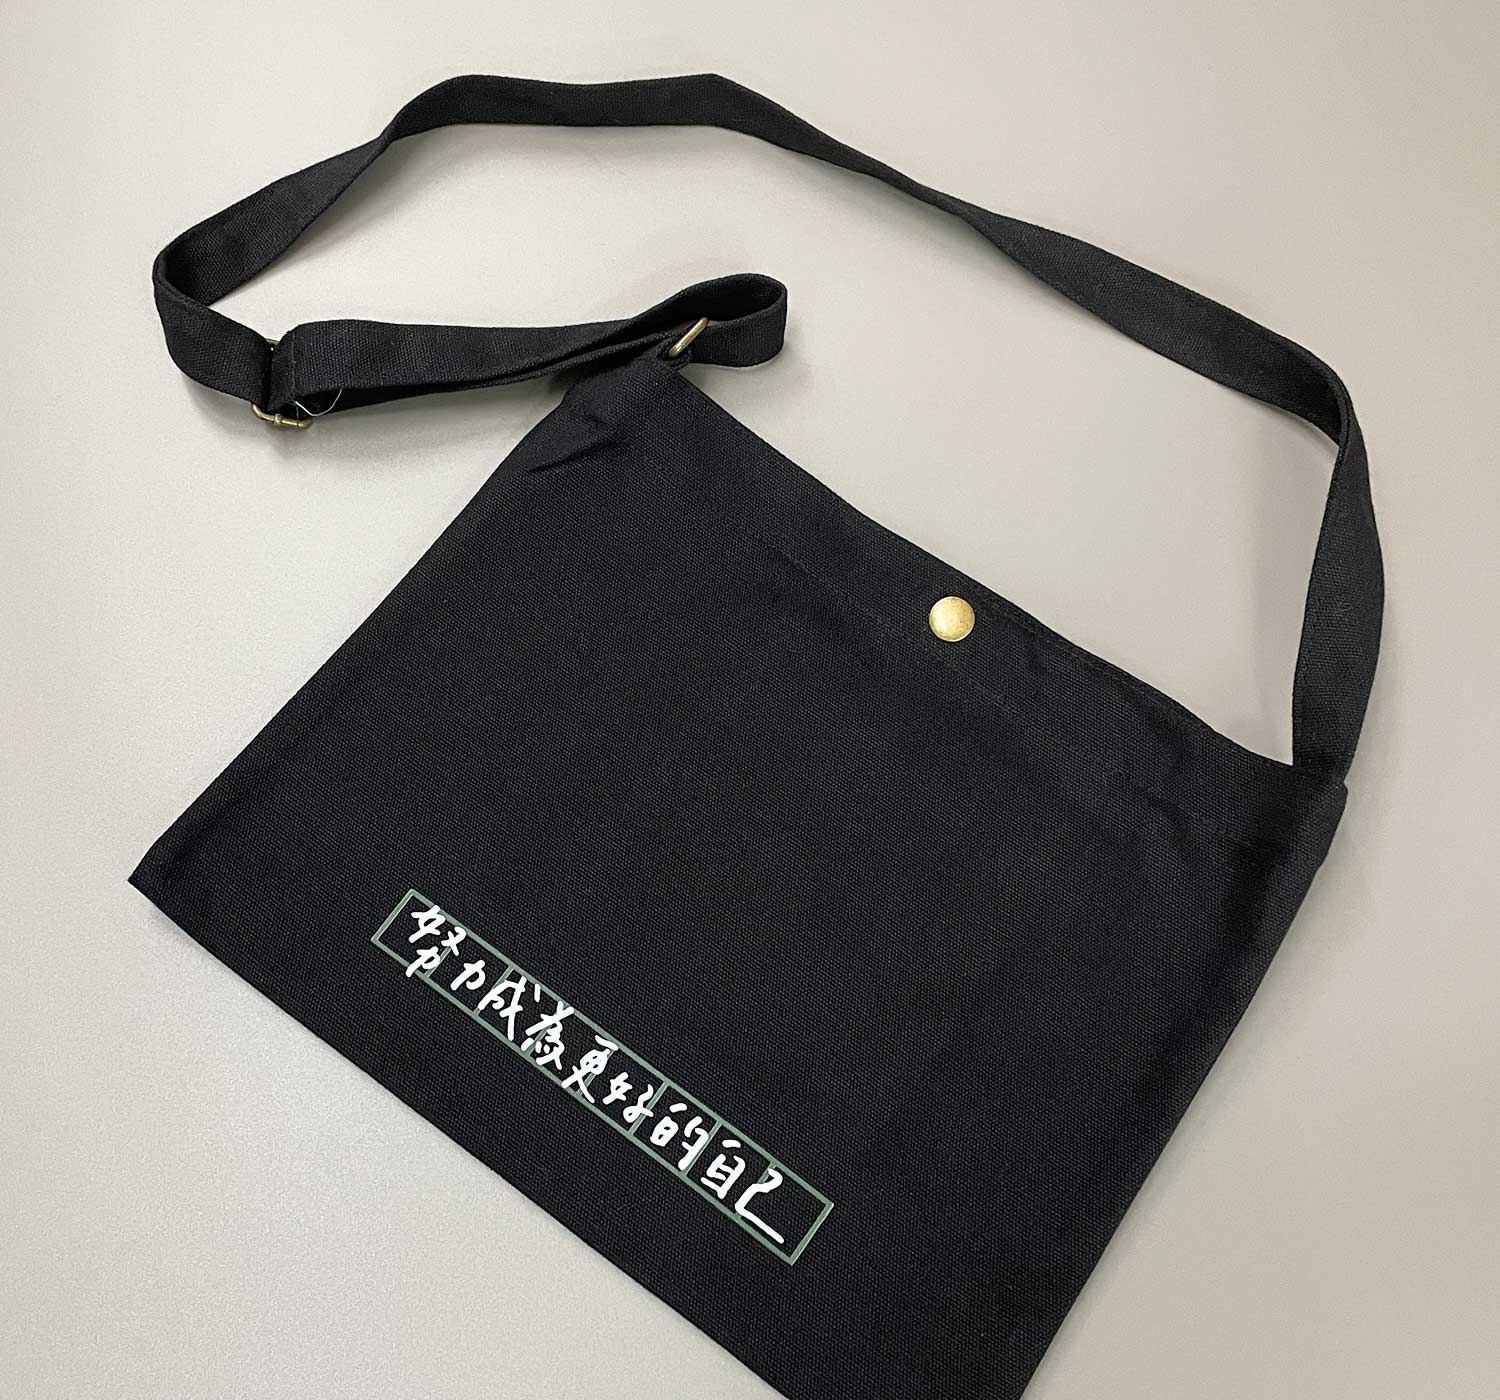 印Totebag | 印束繩袋 | 索繩袋 | 斜孭袋 | 兩用袋 | 訂製Totebag | 印Tote bag | 訂製Tote bag